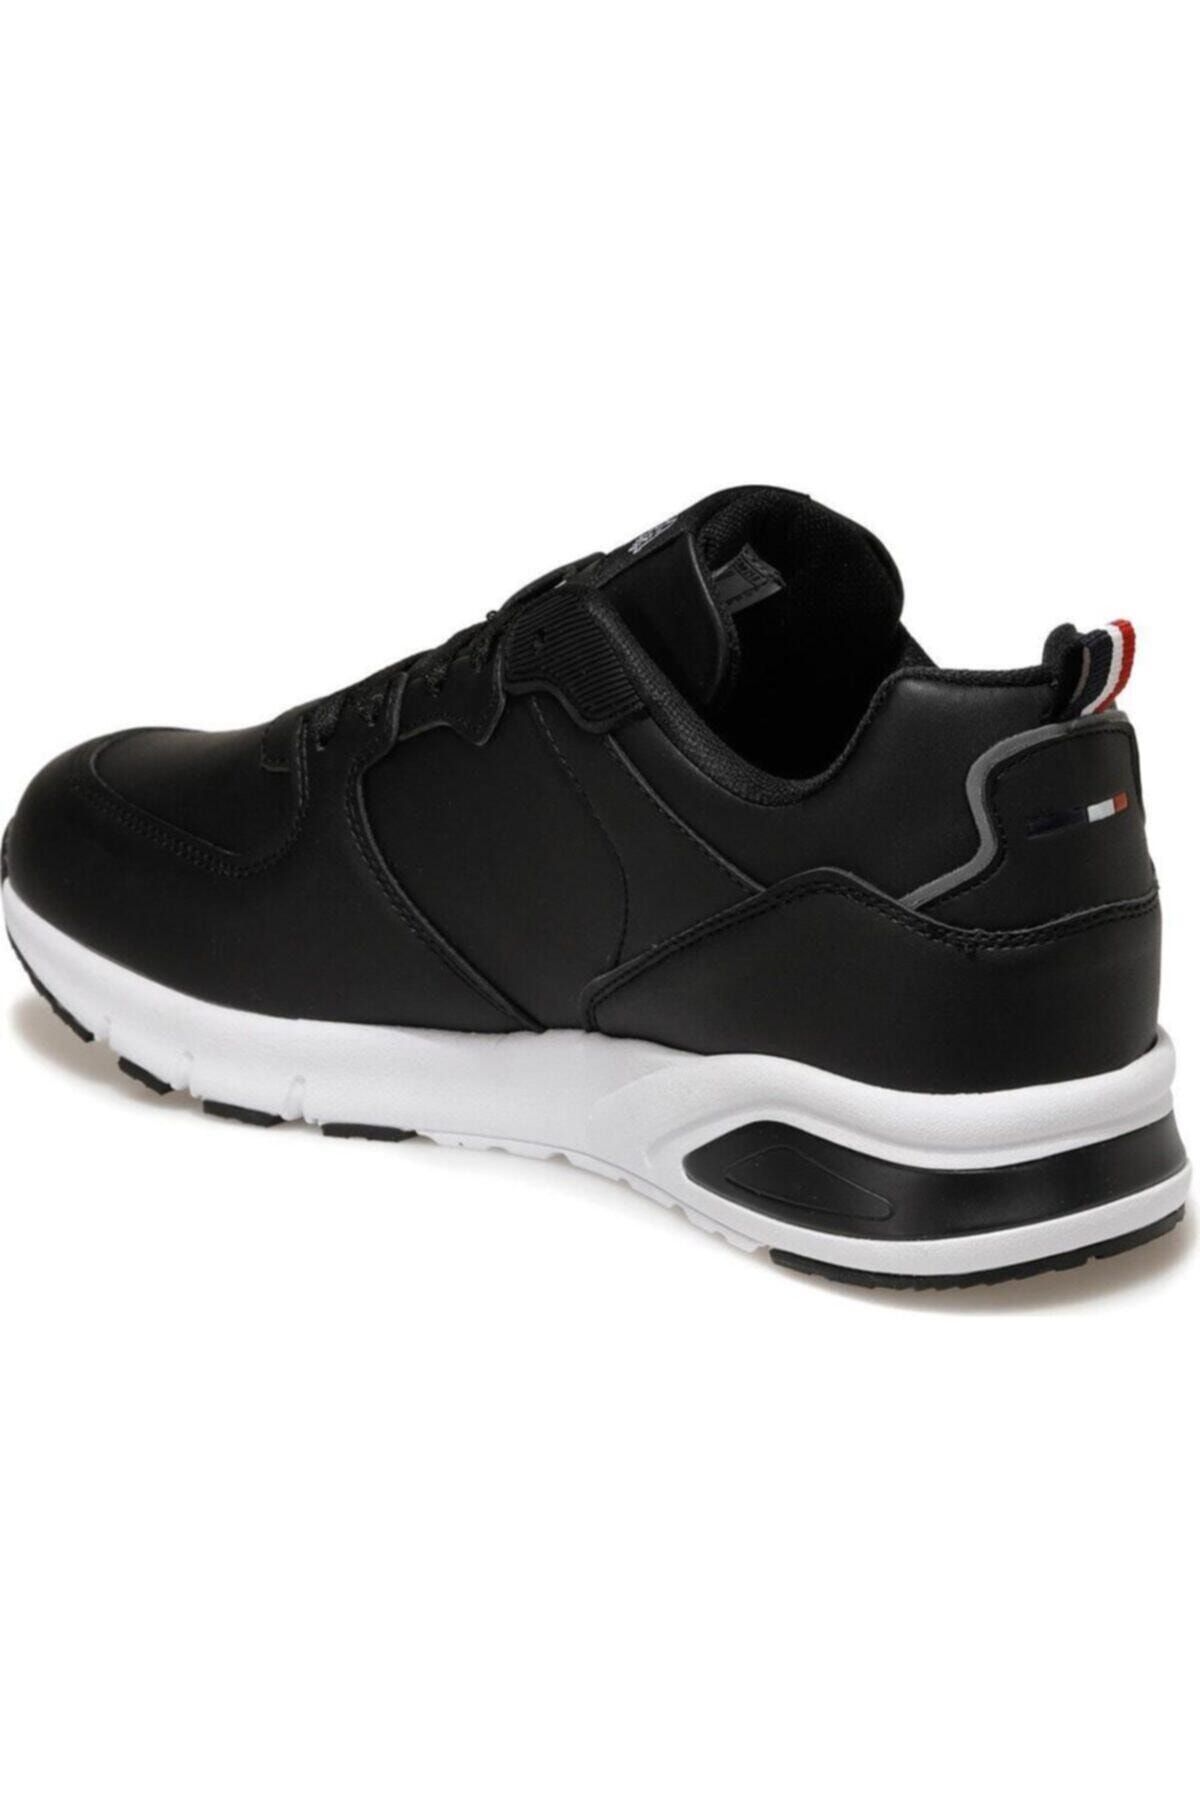 U.S. Polo Assn. VANCE Siyah Erkek Sneaker Ayakkabı 100549423